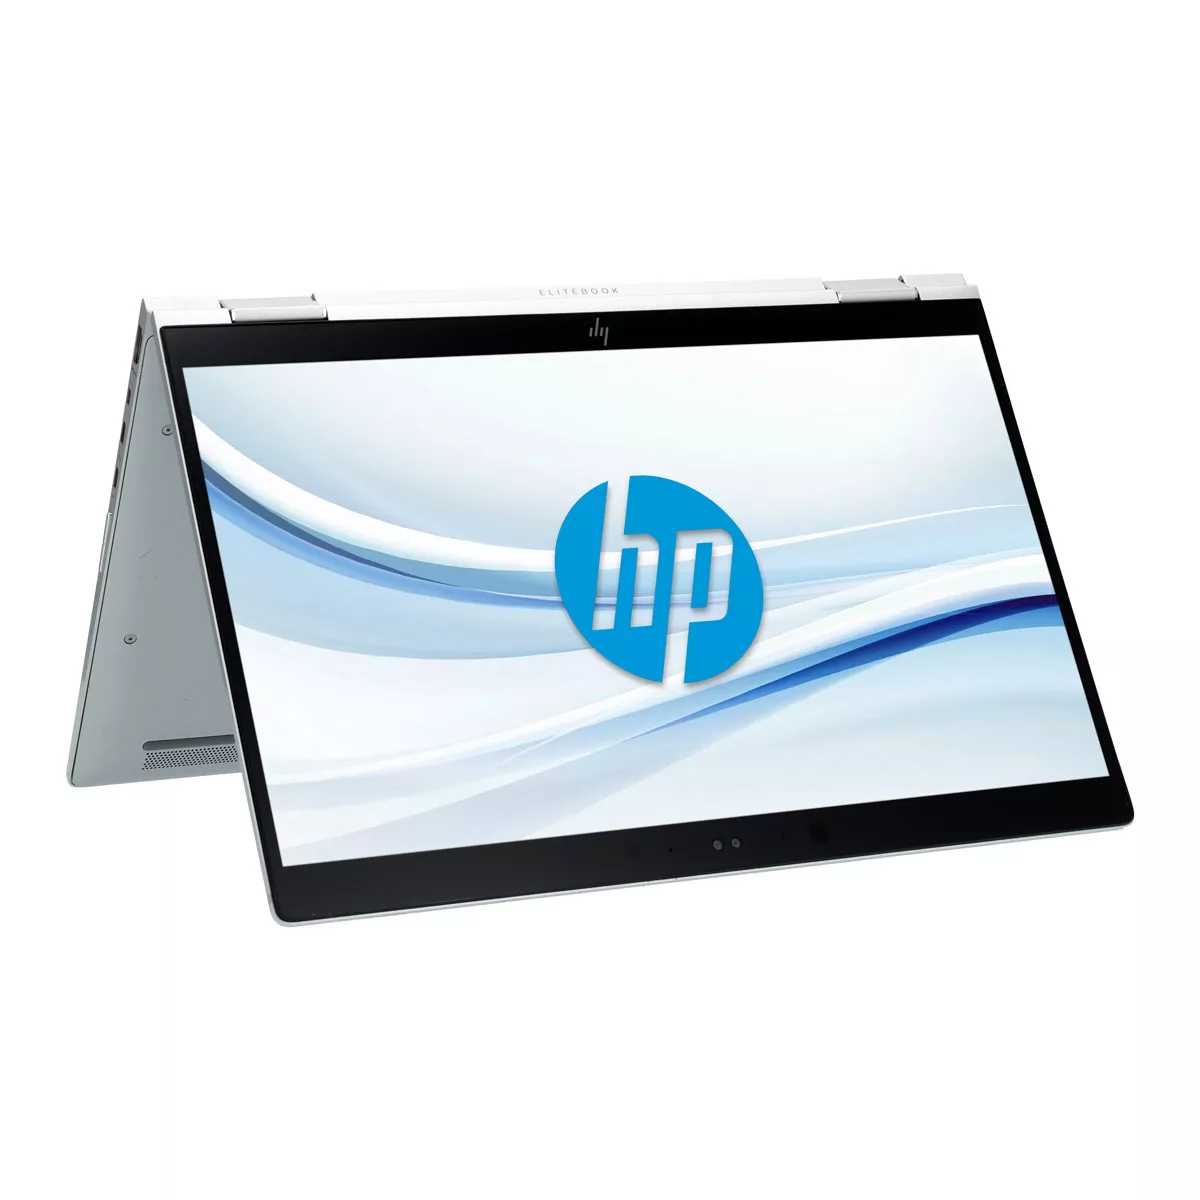 HP EliteBook x360 1030 G3 Core i7 8650U 16 GB 500 GB M.2 nVME SSD Touch Webcam B